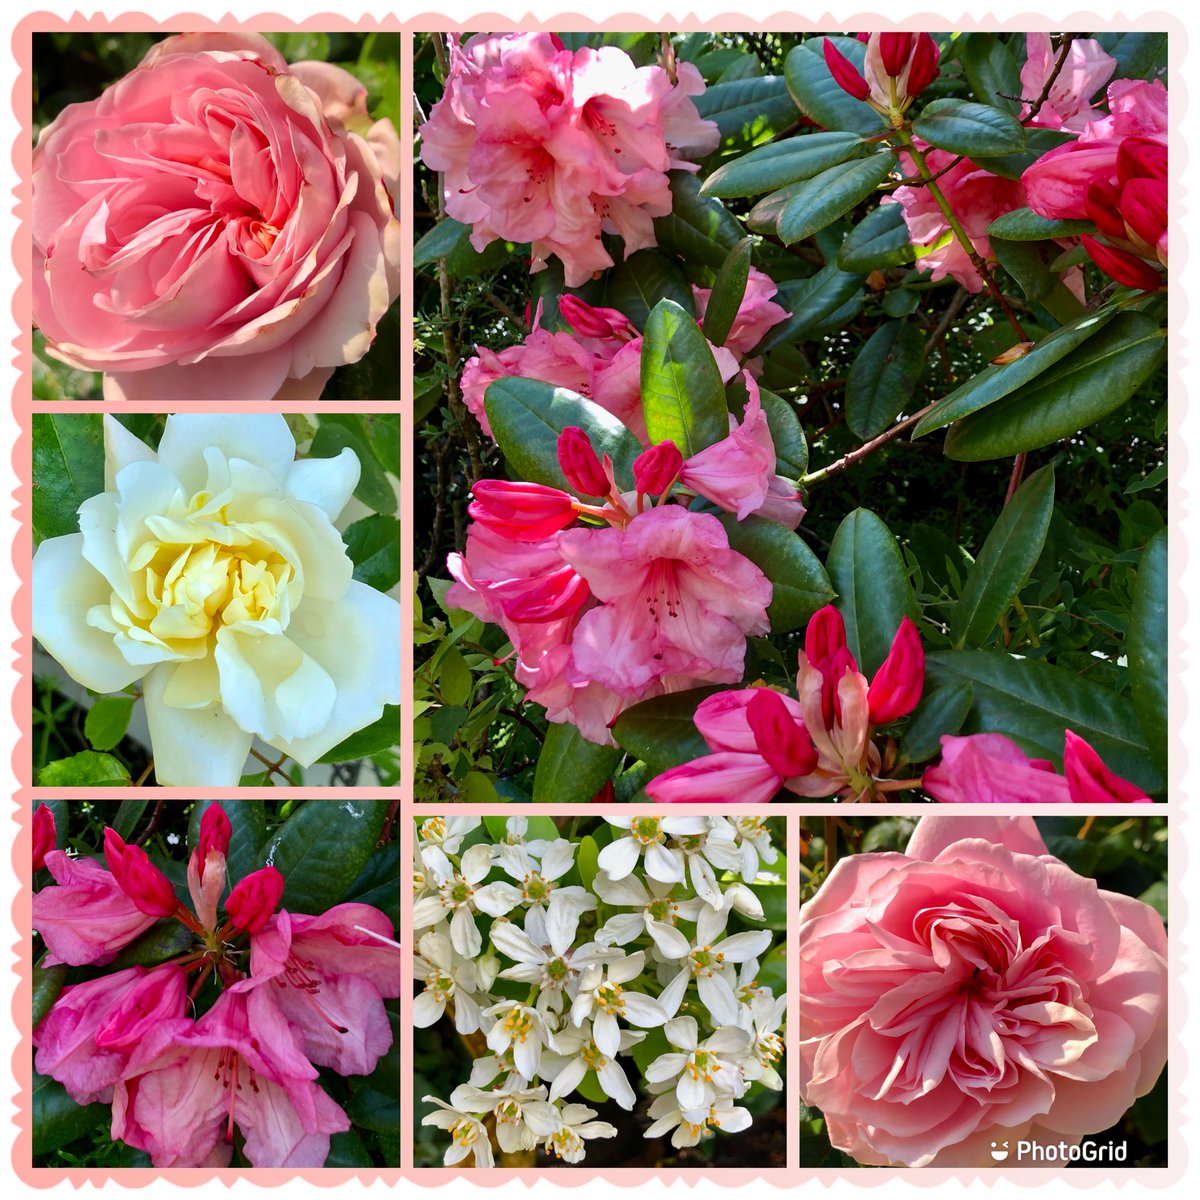 A sunny start 🌞#SixOnSaturday #SaturdayVibes #Roses #Rhododendron #Choisya #Flowers #MyGarden